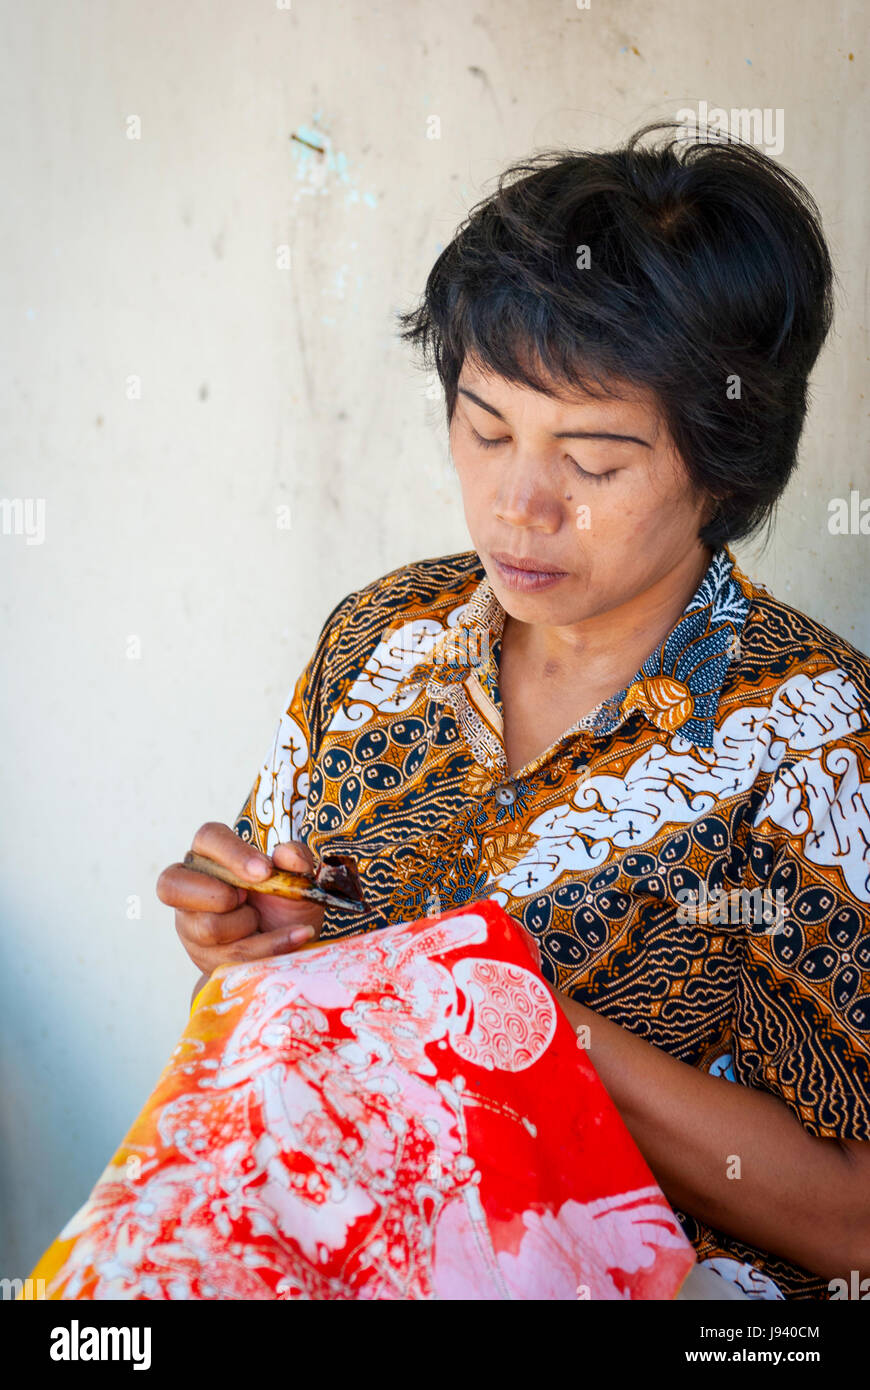 YOGYAKARTA, INDONESIA - SEPTEMBER, 15: Indonesian woman applying vax on batik in workshop. Batik is traditional art made by applying vax and dye on fa Stock Photo